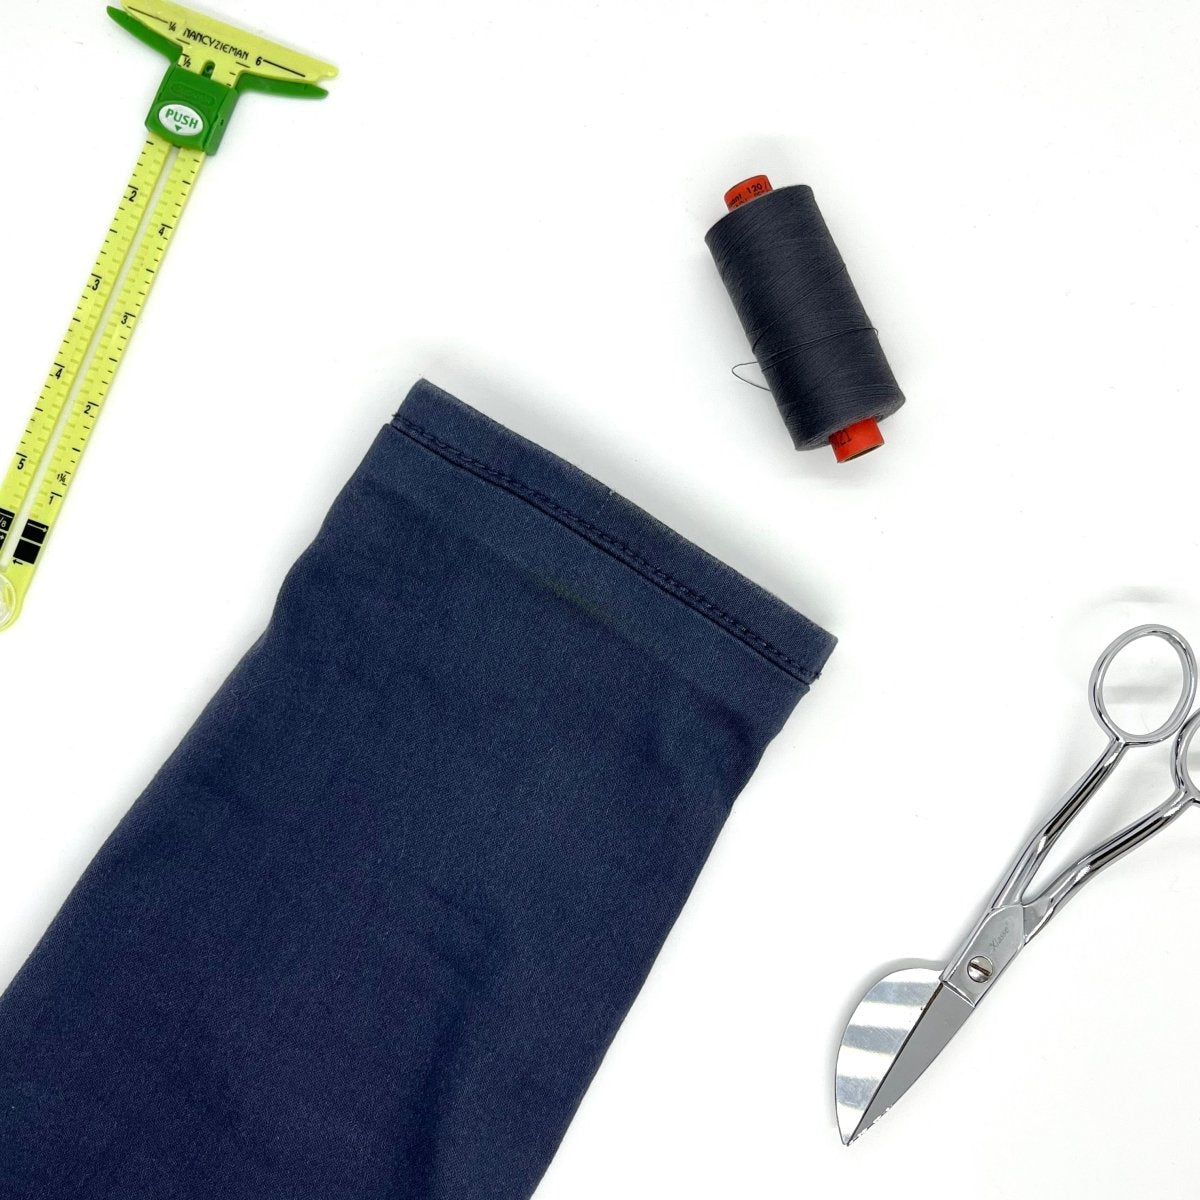 Tips for taking up pants using the original hem – Sewing Gem